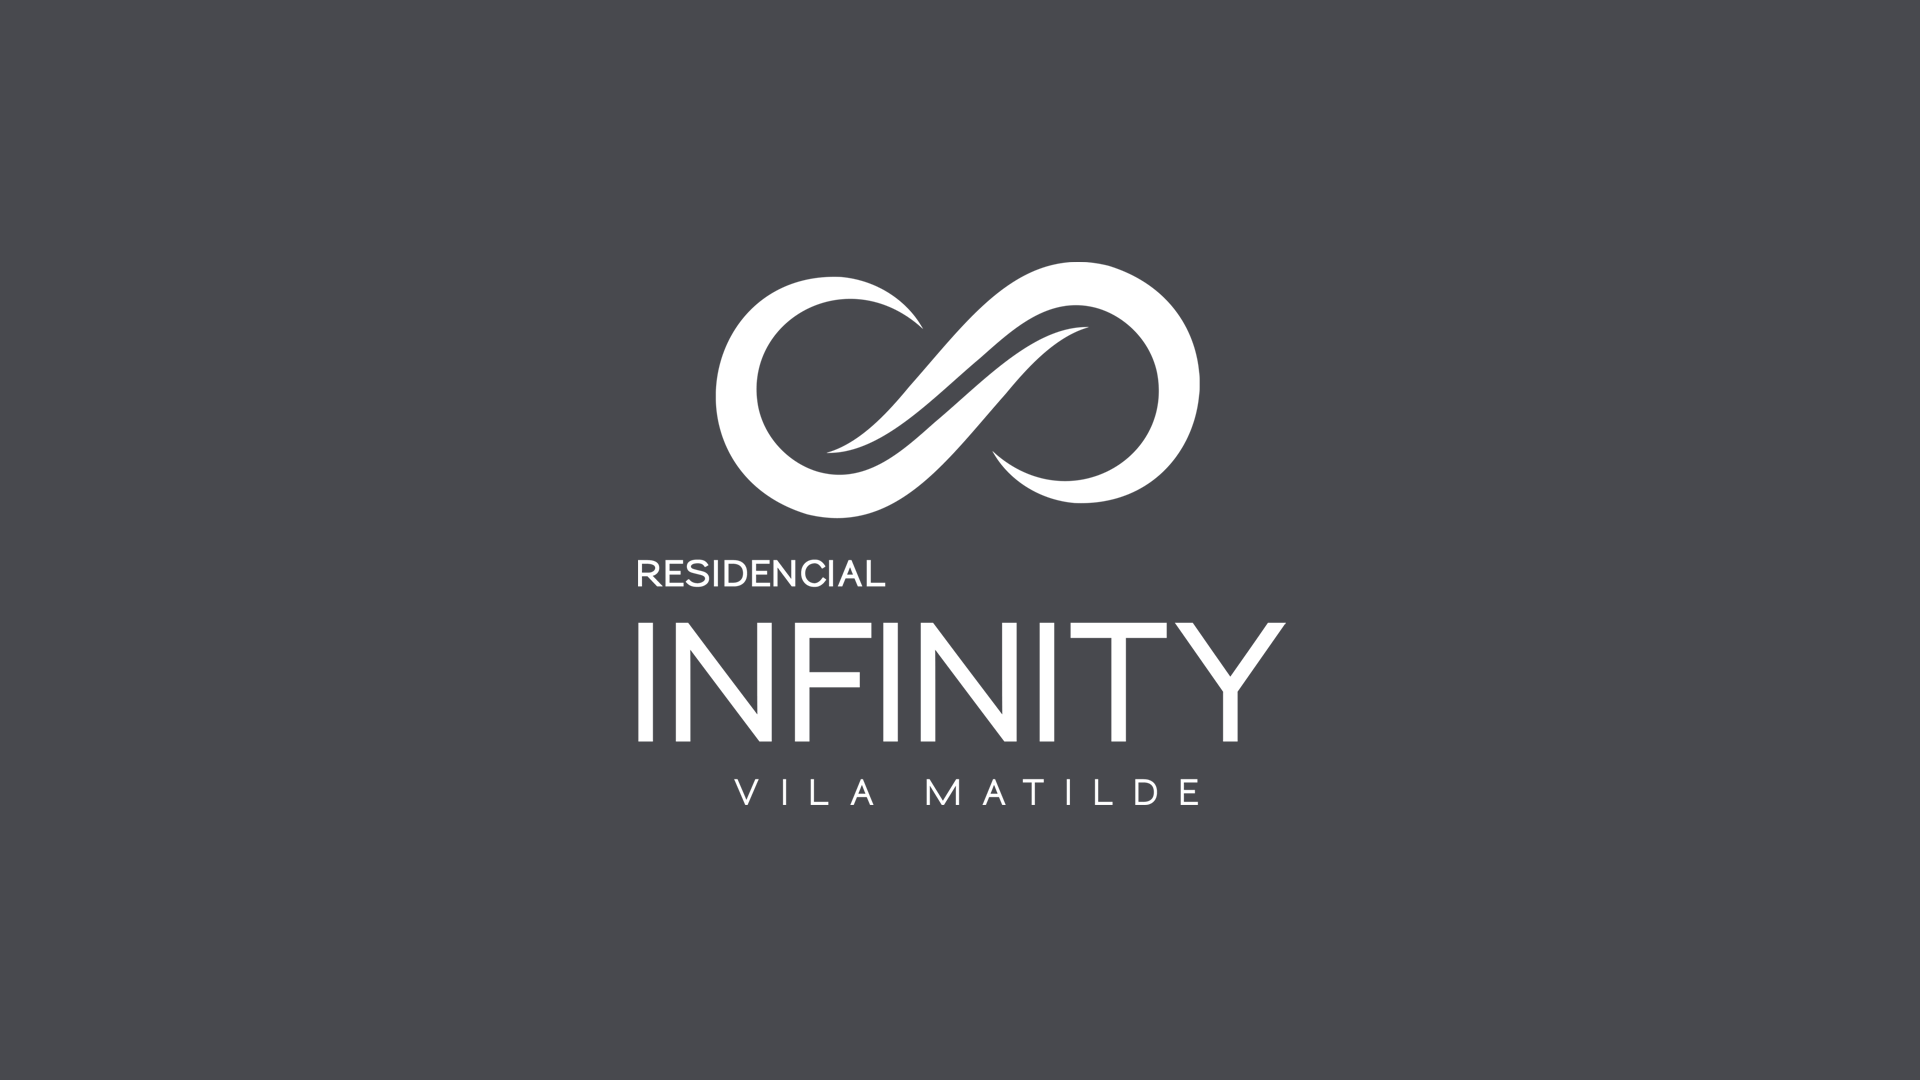 Infinity Vila Matilde — Lofts & Studios, Aptos 01 / 02 Dorms.